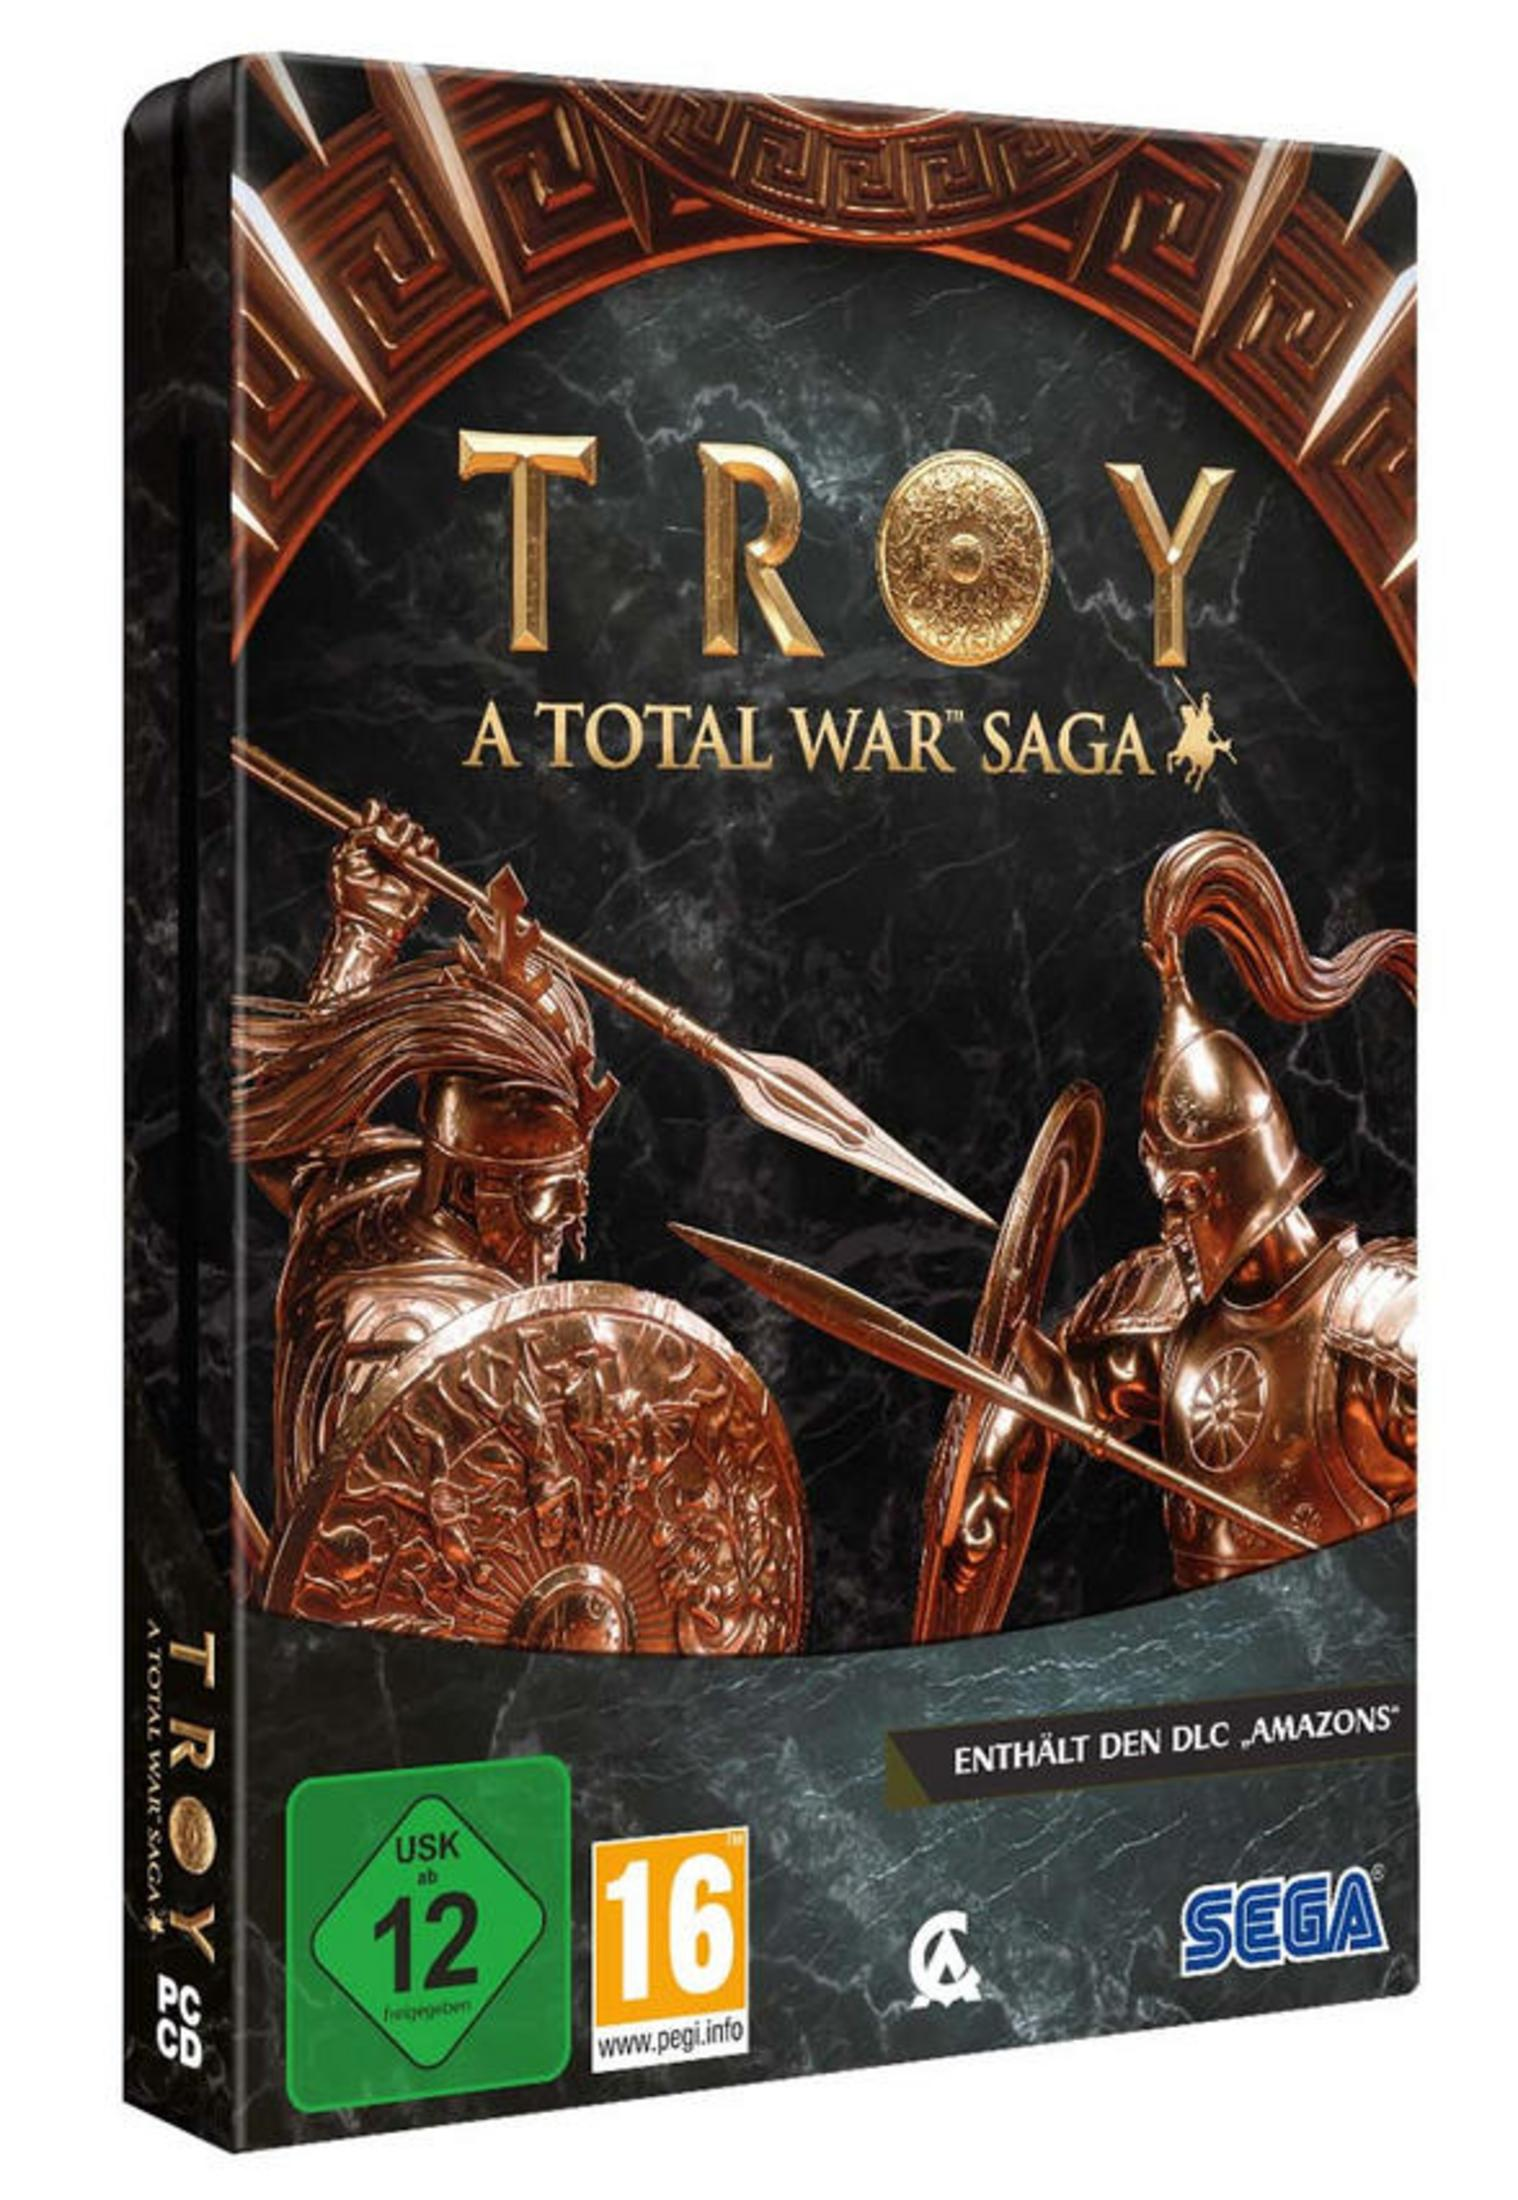 Total - Edition A Limited [PC] Troy Saga: War